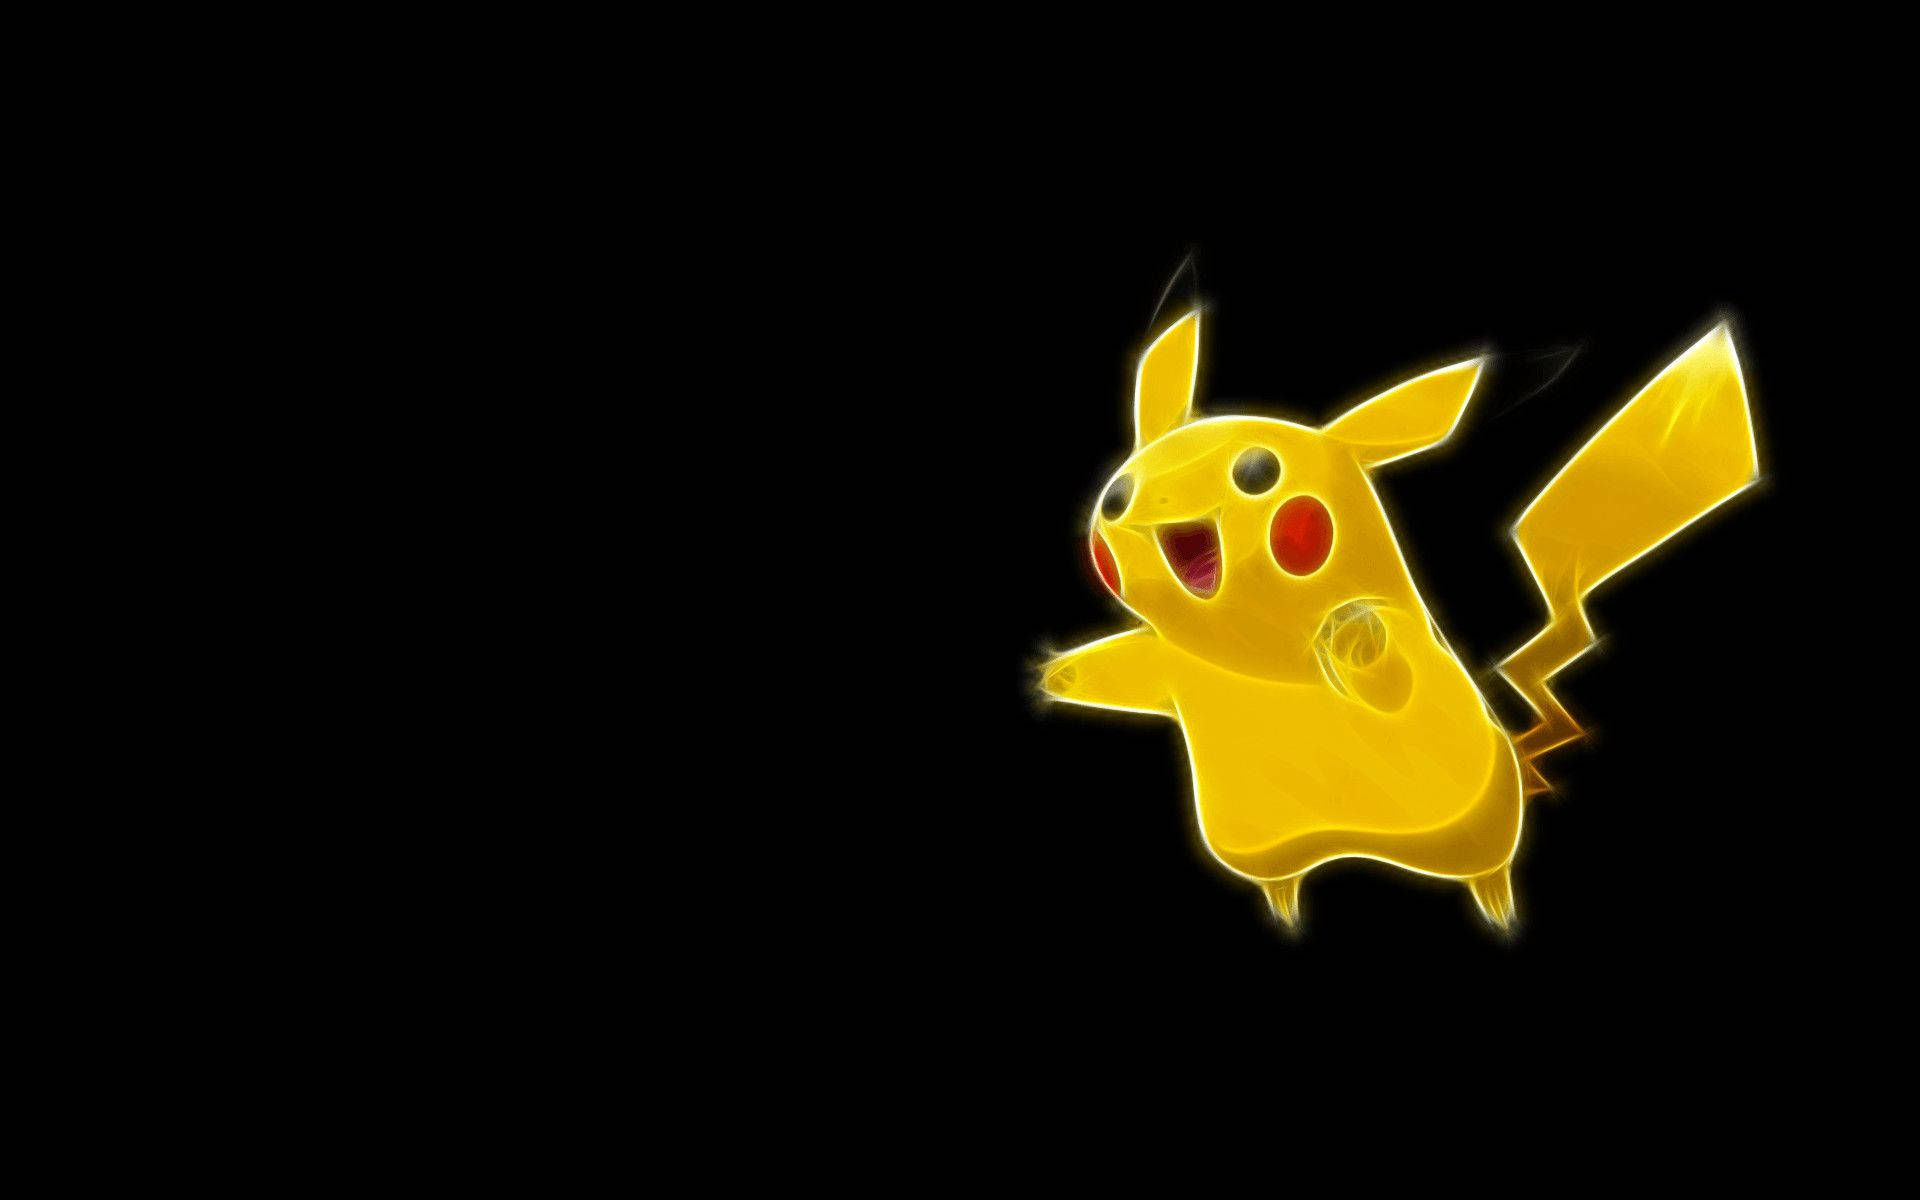 Yellow Pokémon Pikachu 3d